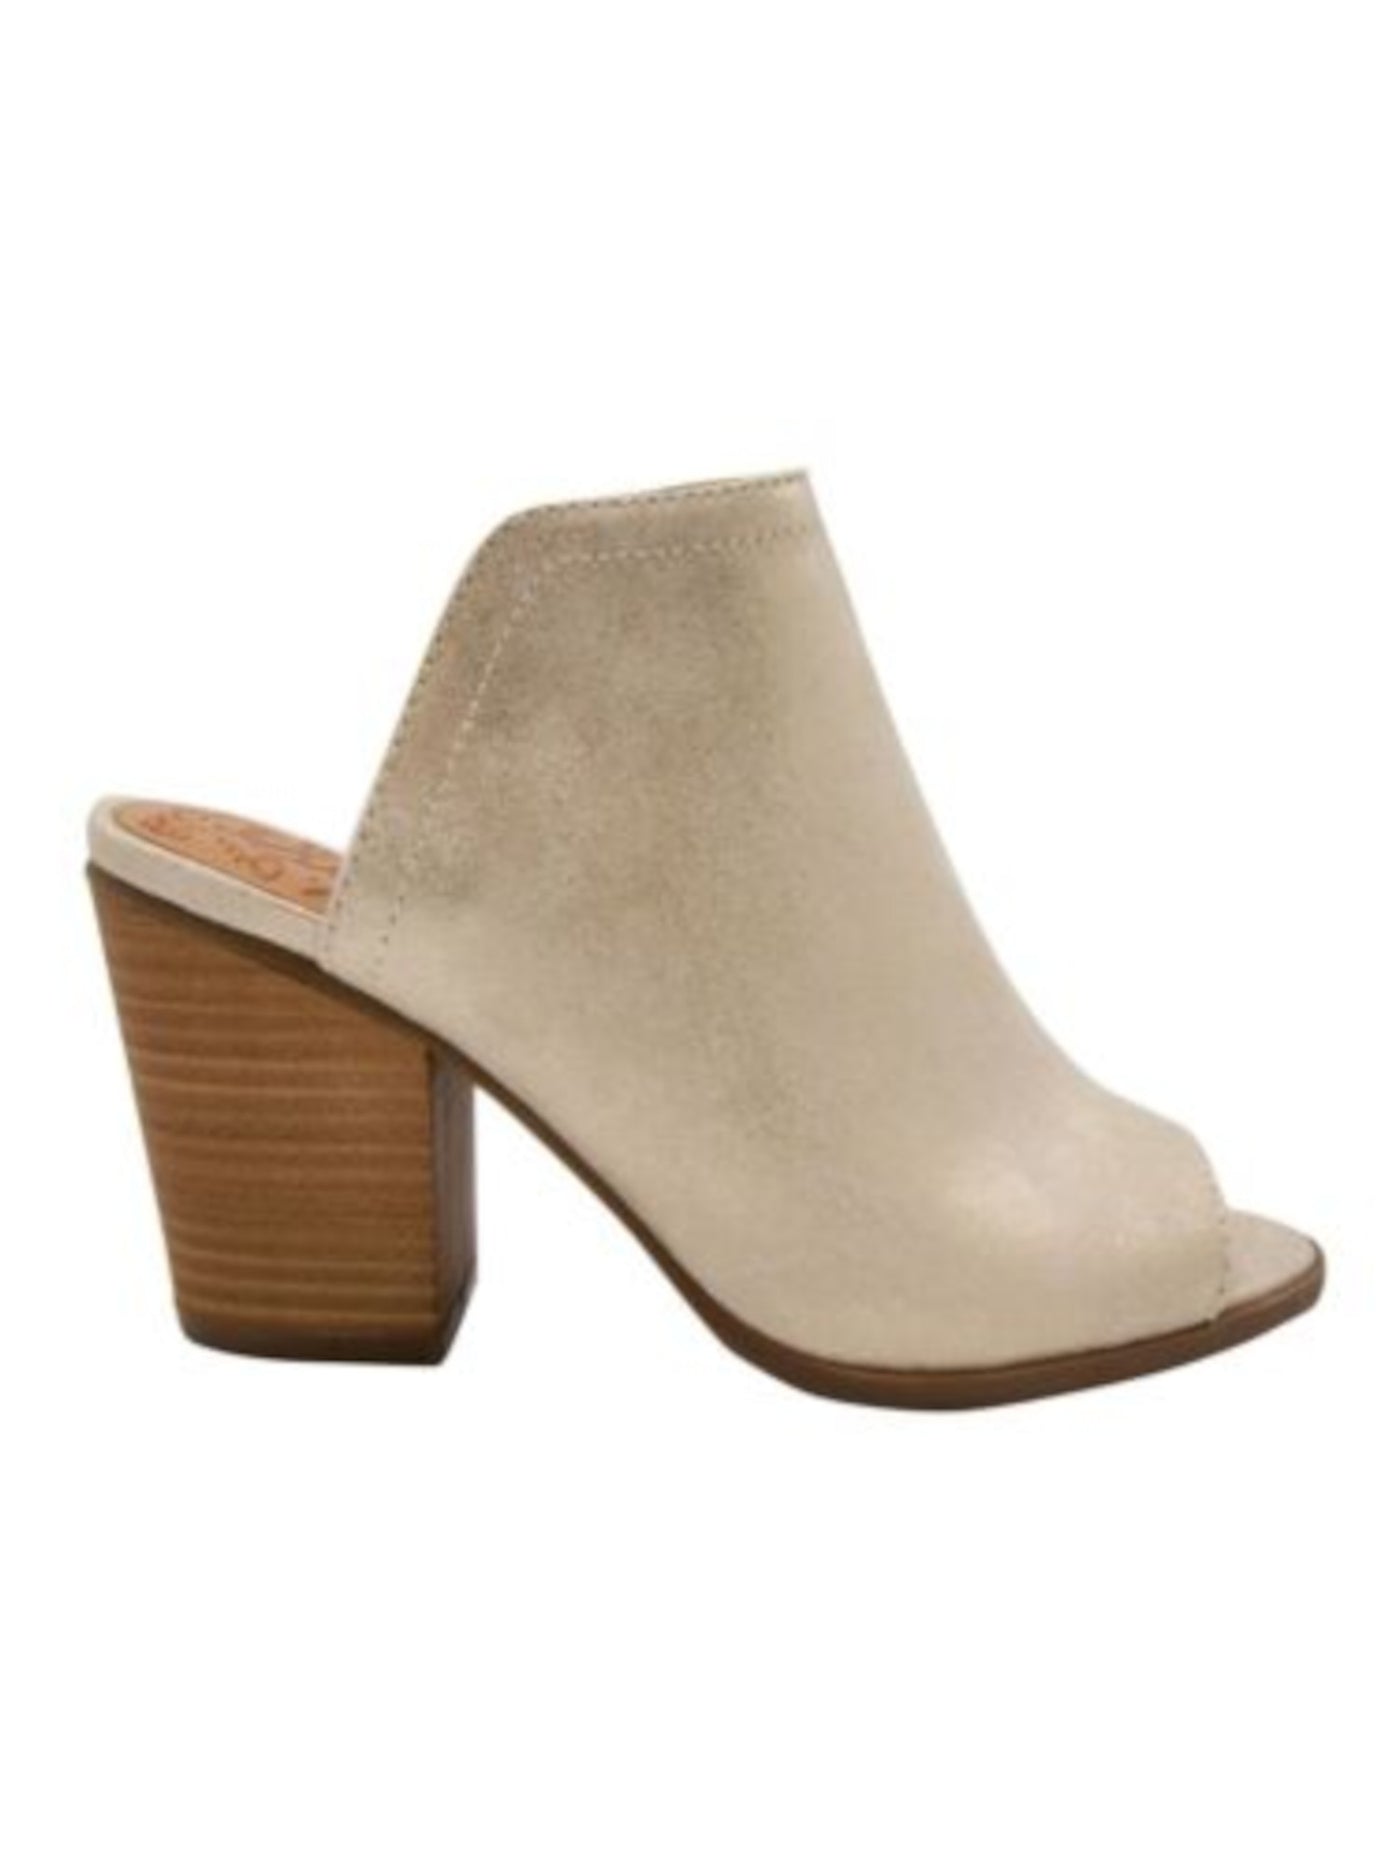 SUGAR Womens Gold Comfort Peppermint Round Toe Block Heel Slip On Heeled Mules Shoes 7.5 M